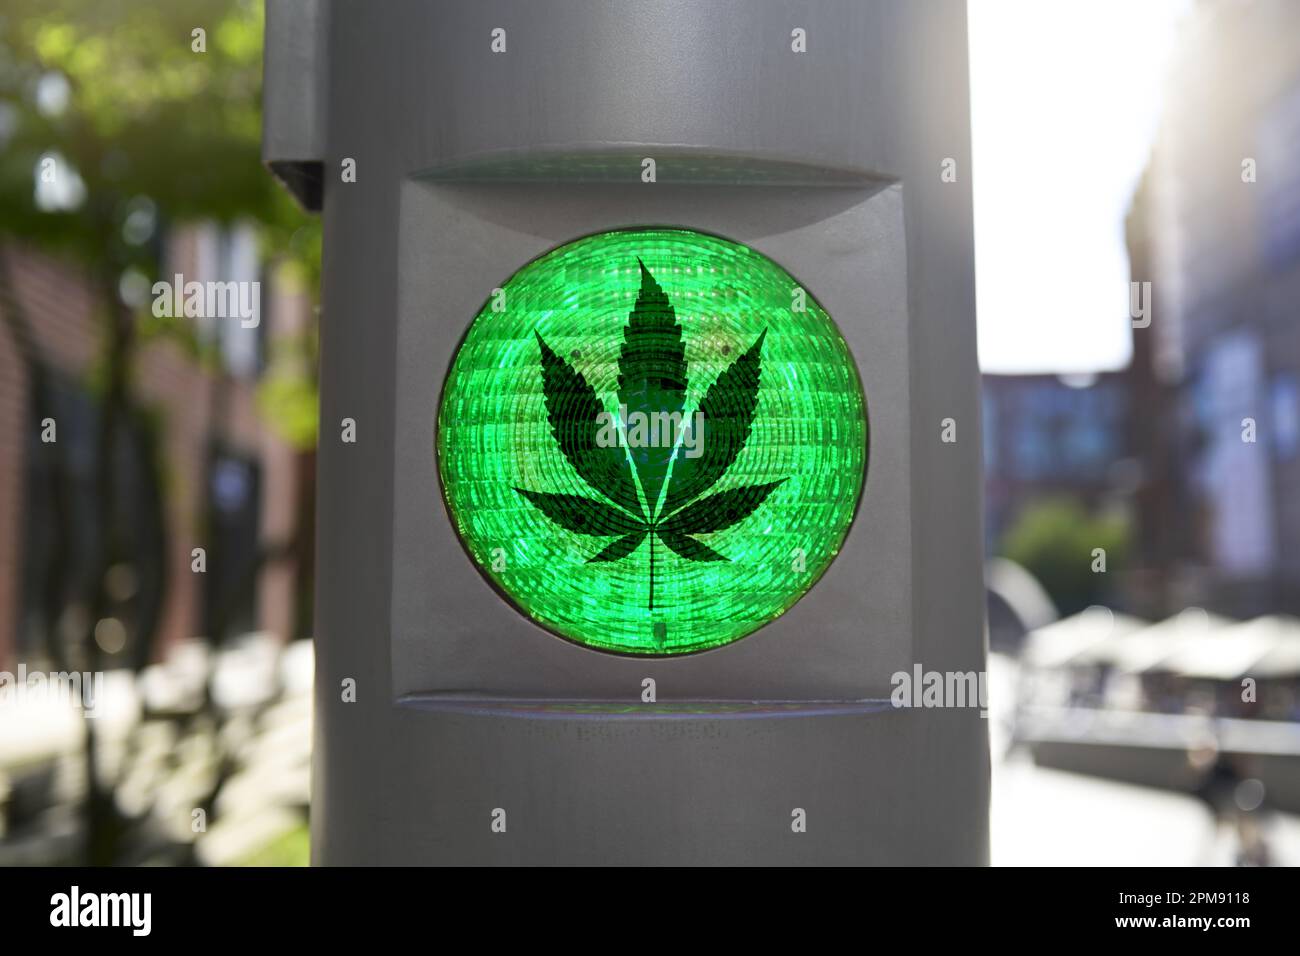 FOTOMONTAGE, Grüne Ampel mit Cannabisblatt, Symbolfoton Cannabis-Legalisierung Foto Stock